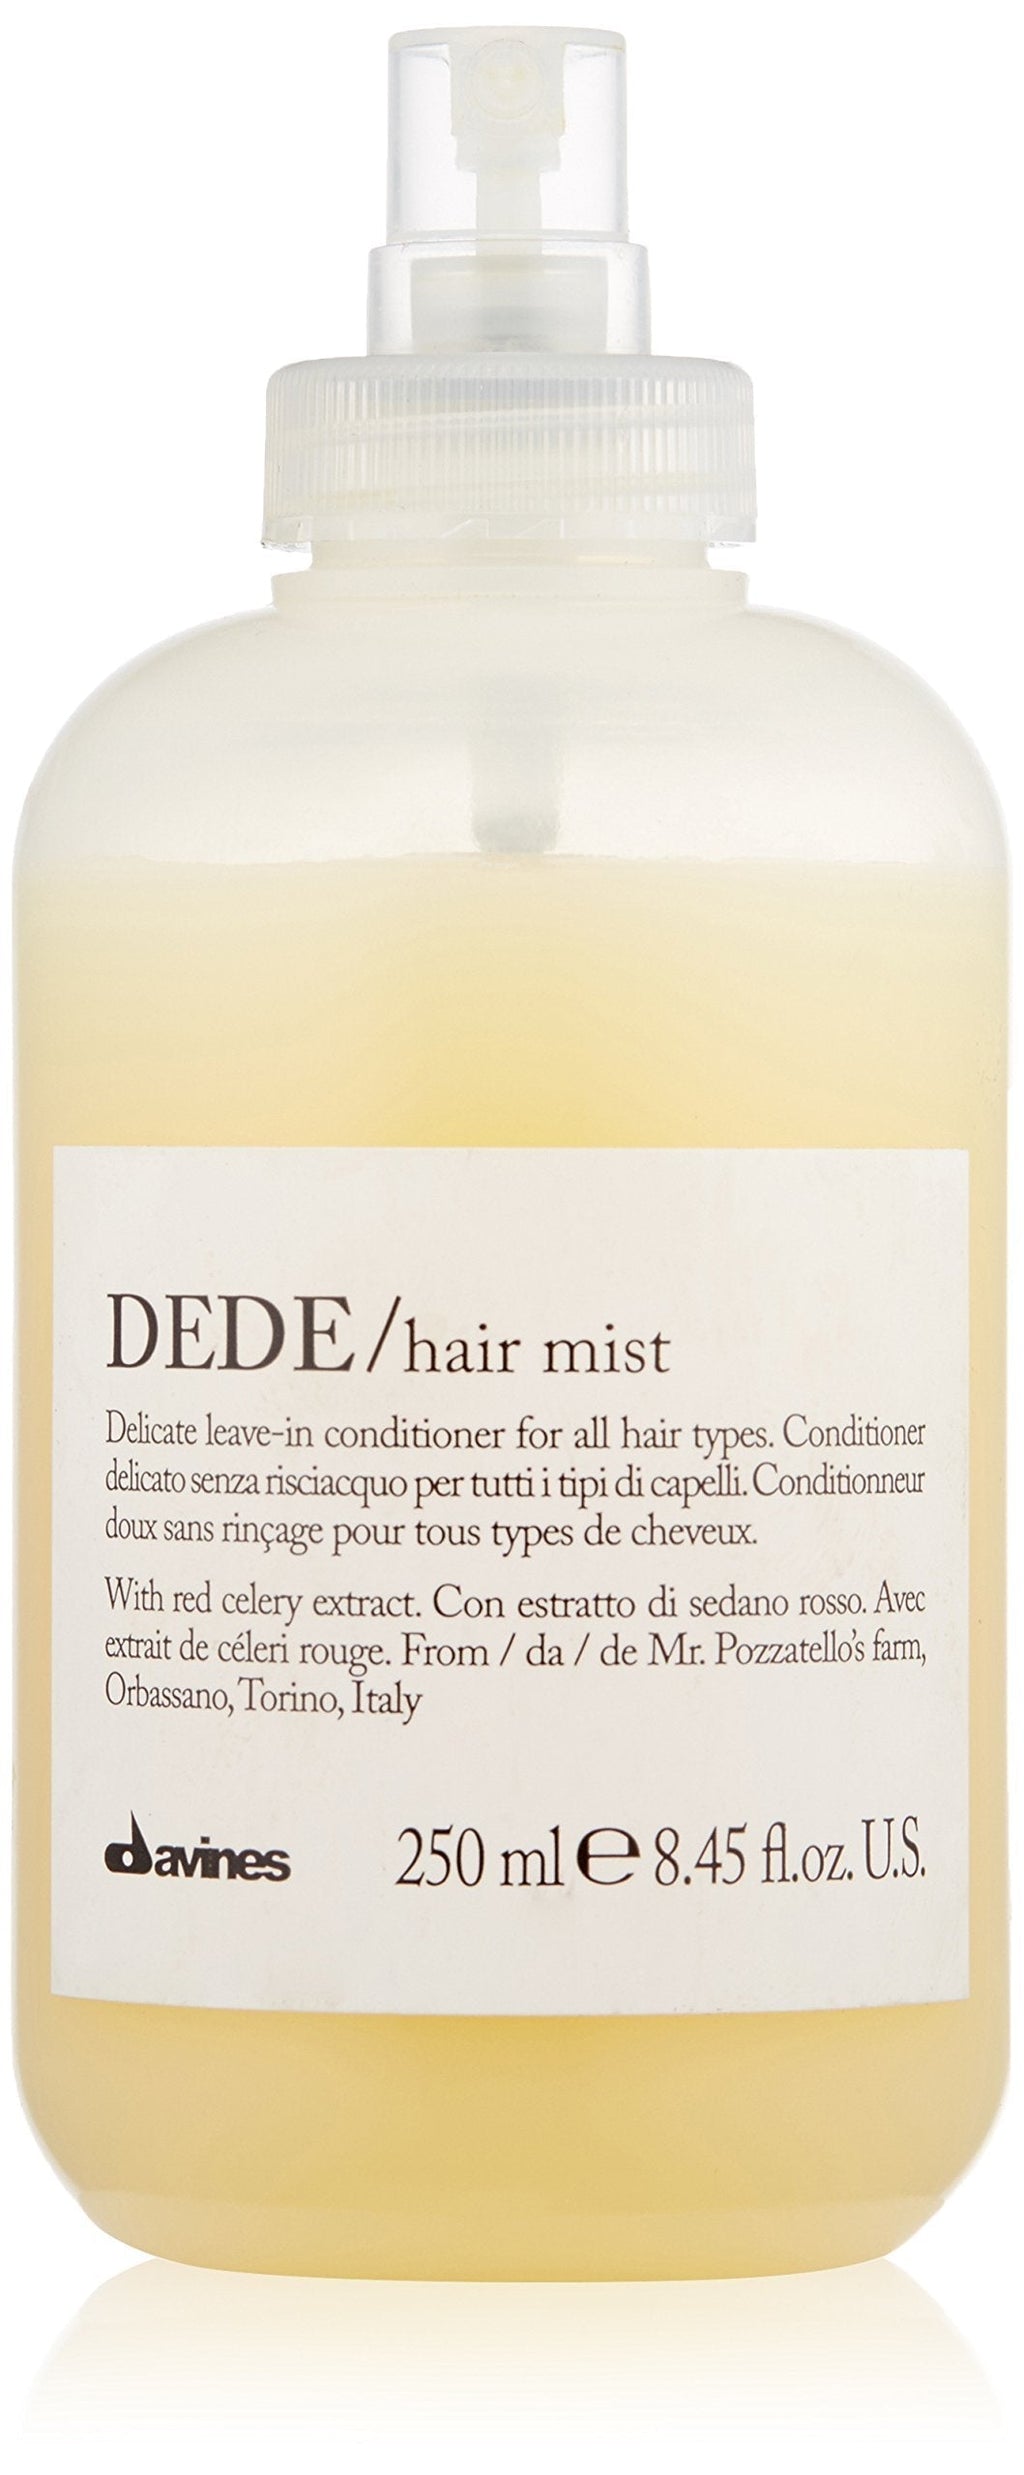 [Australia] - Davines Dede Hair Mist, 250 ml (Pack of 1) 